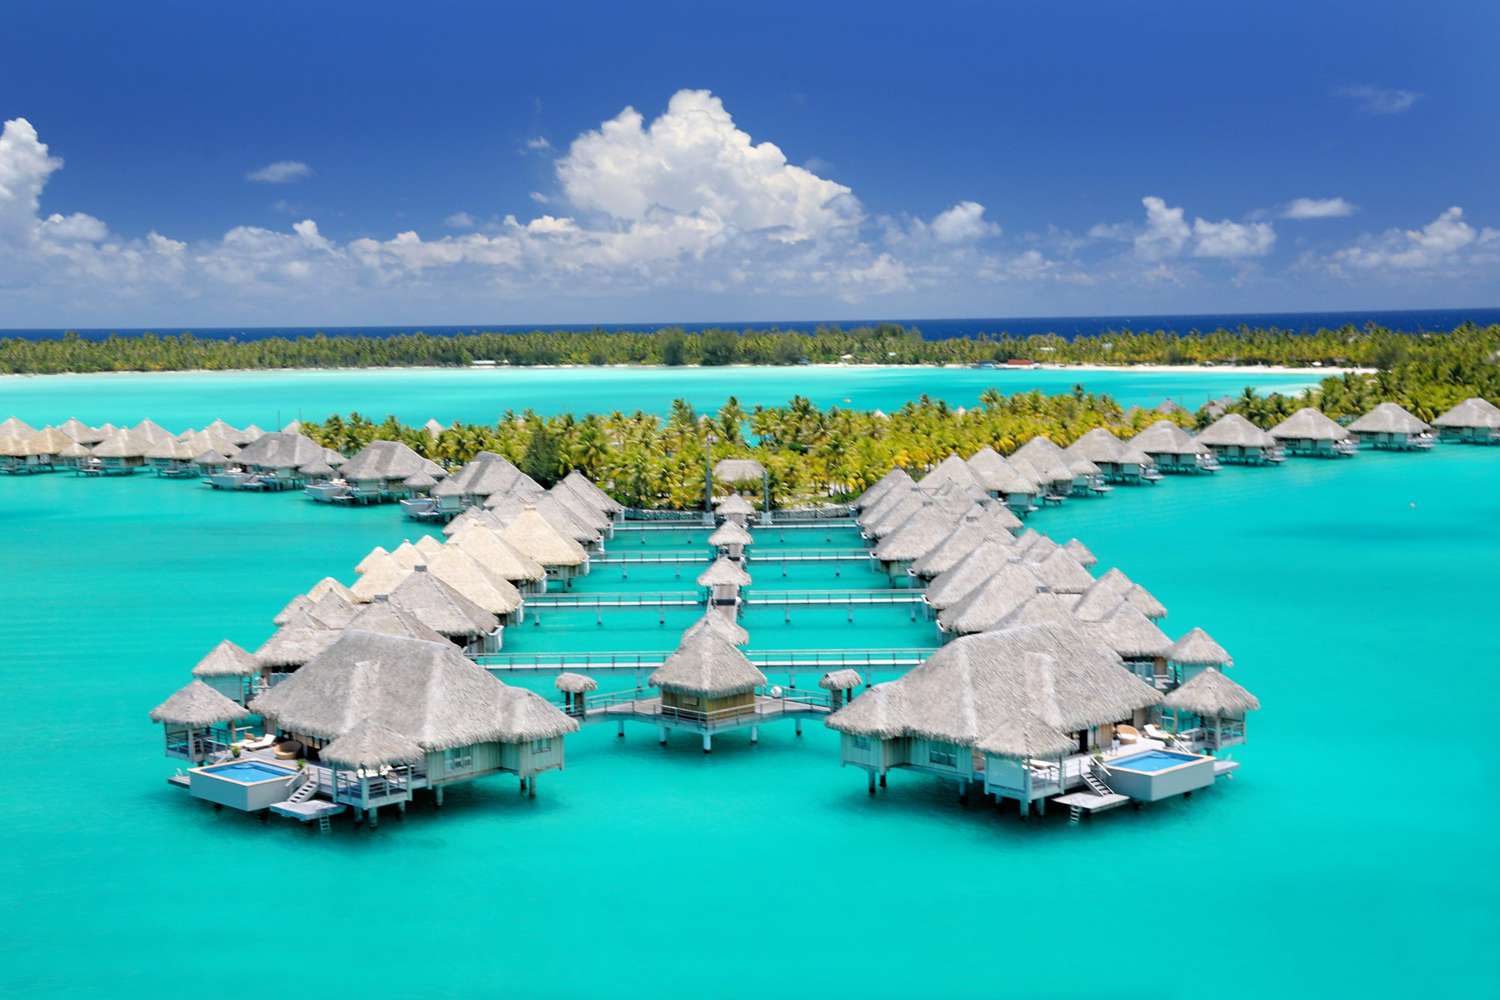 St. Regis Bora Bora Resort, French Polynesia